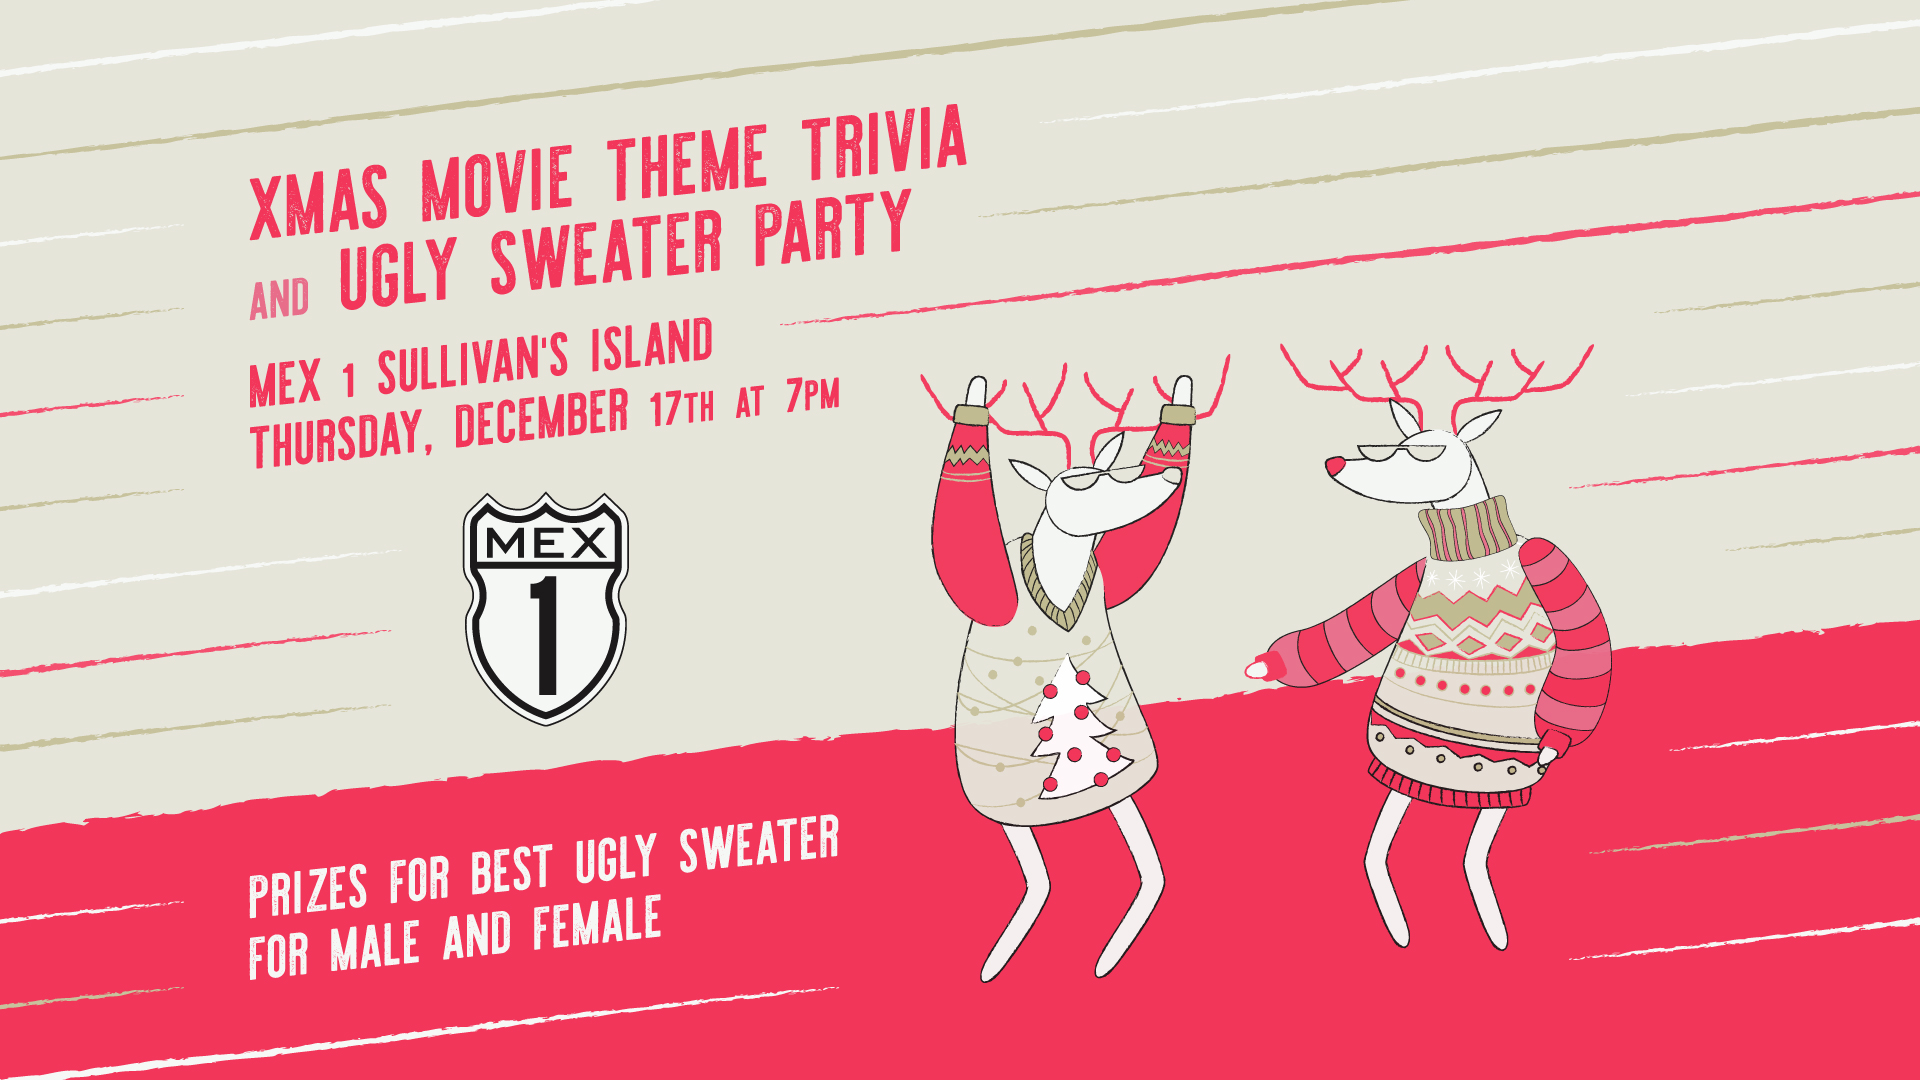 Ugly Sweater and Xmas Theme Trivia at Mex 1 Sullivan's Island